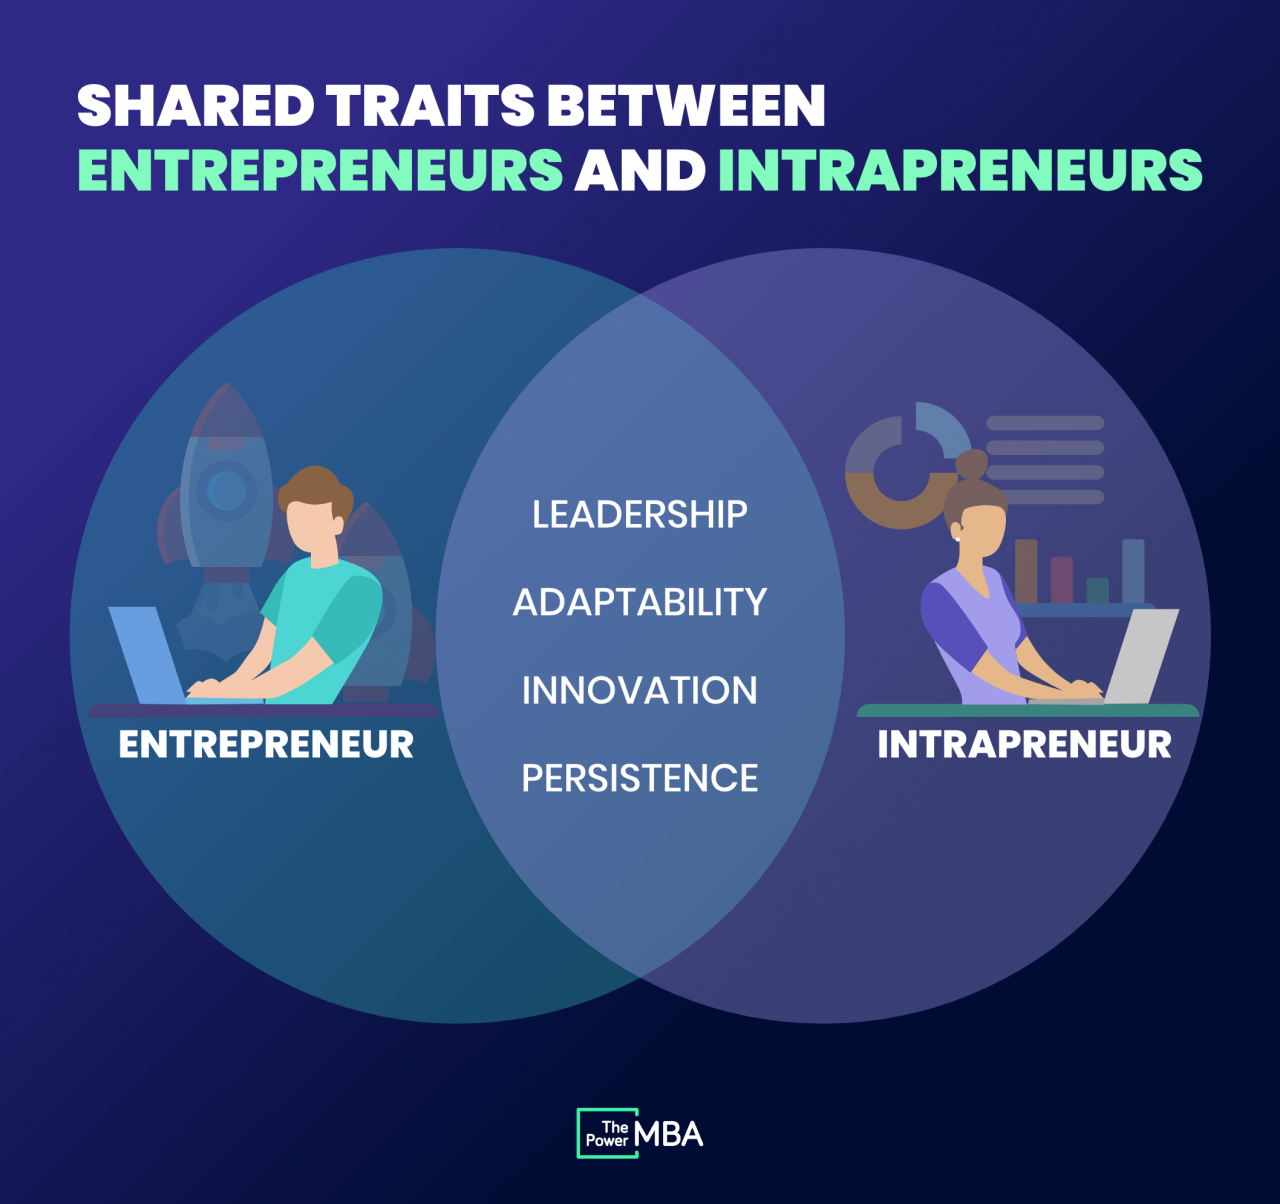 Entrepreneurship Versus Intrapreneurship Whats The Difference